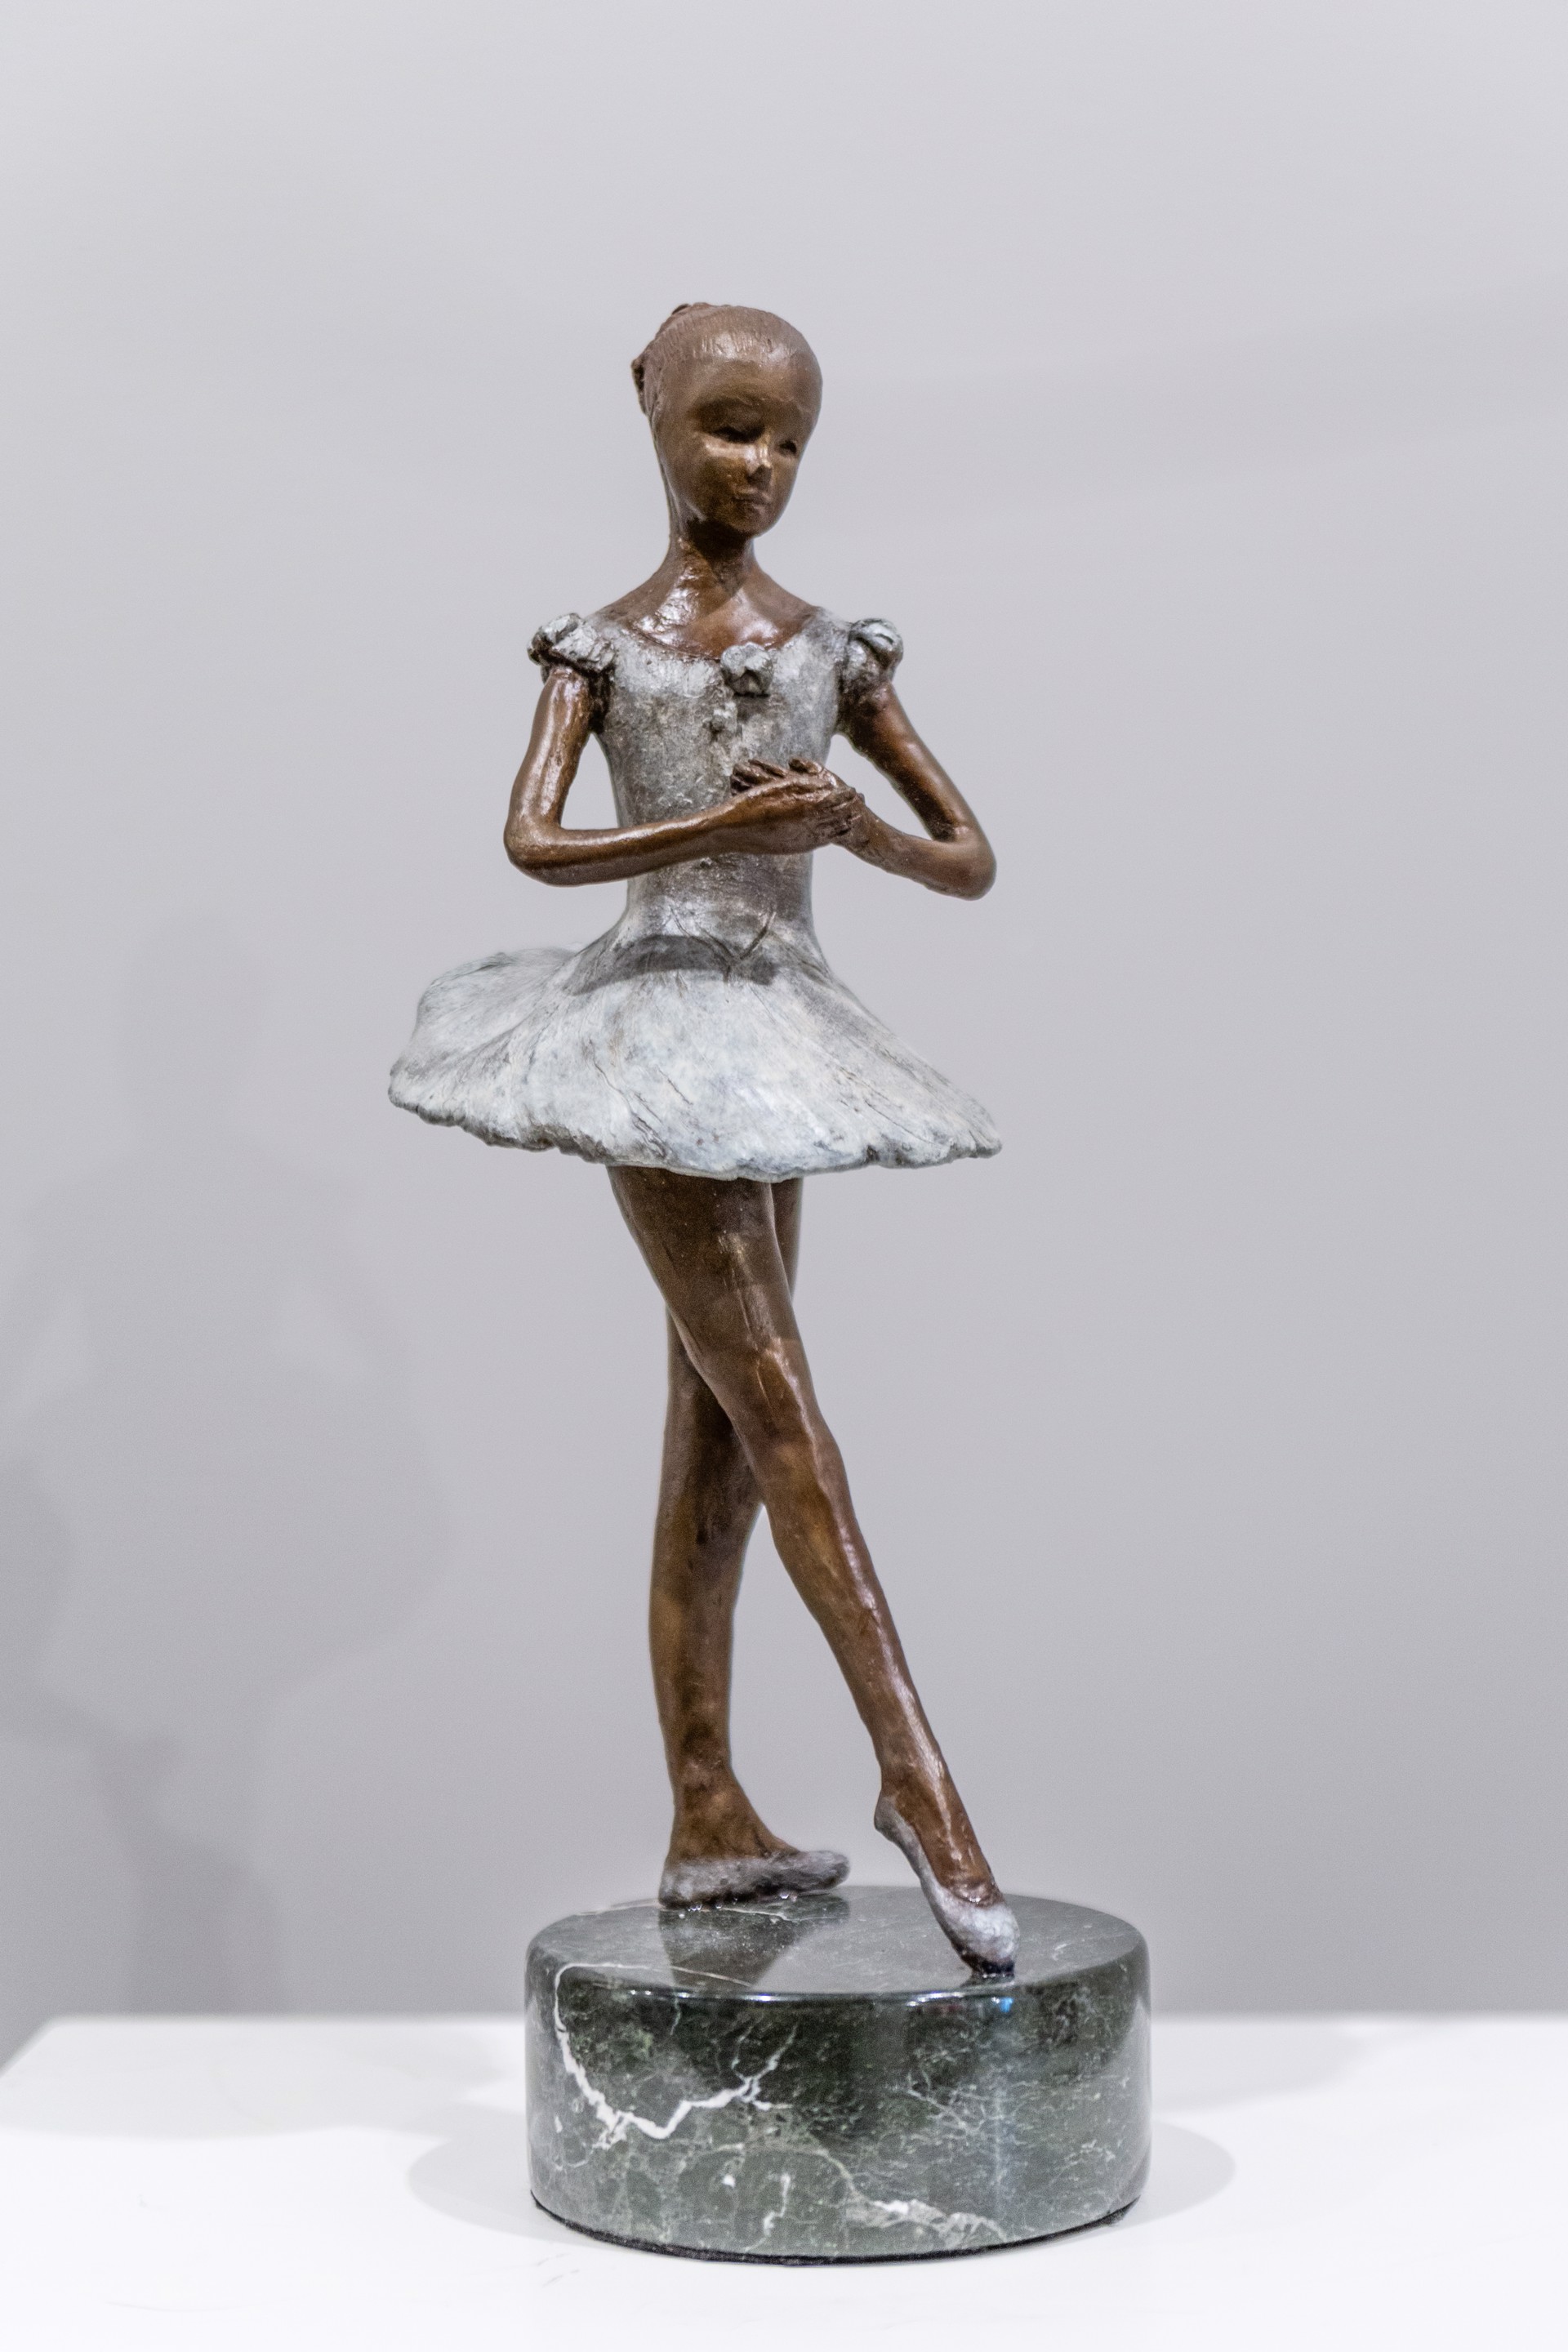 Little Ballerina by Cathy Ferrell